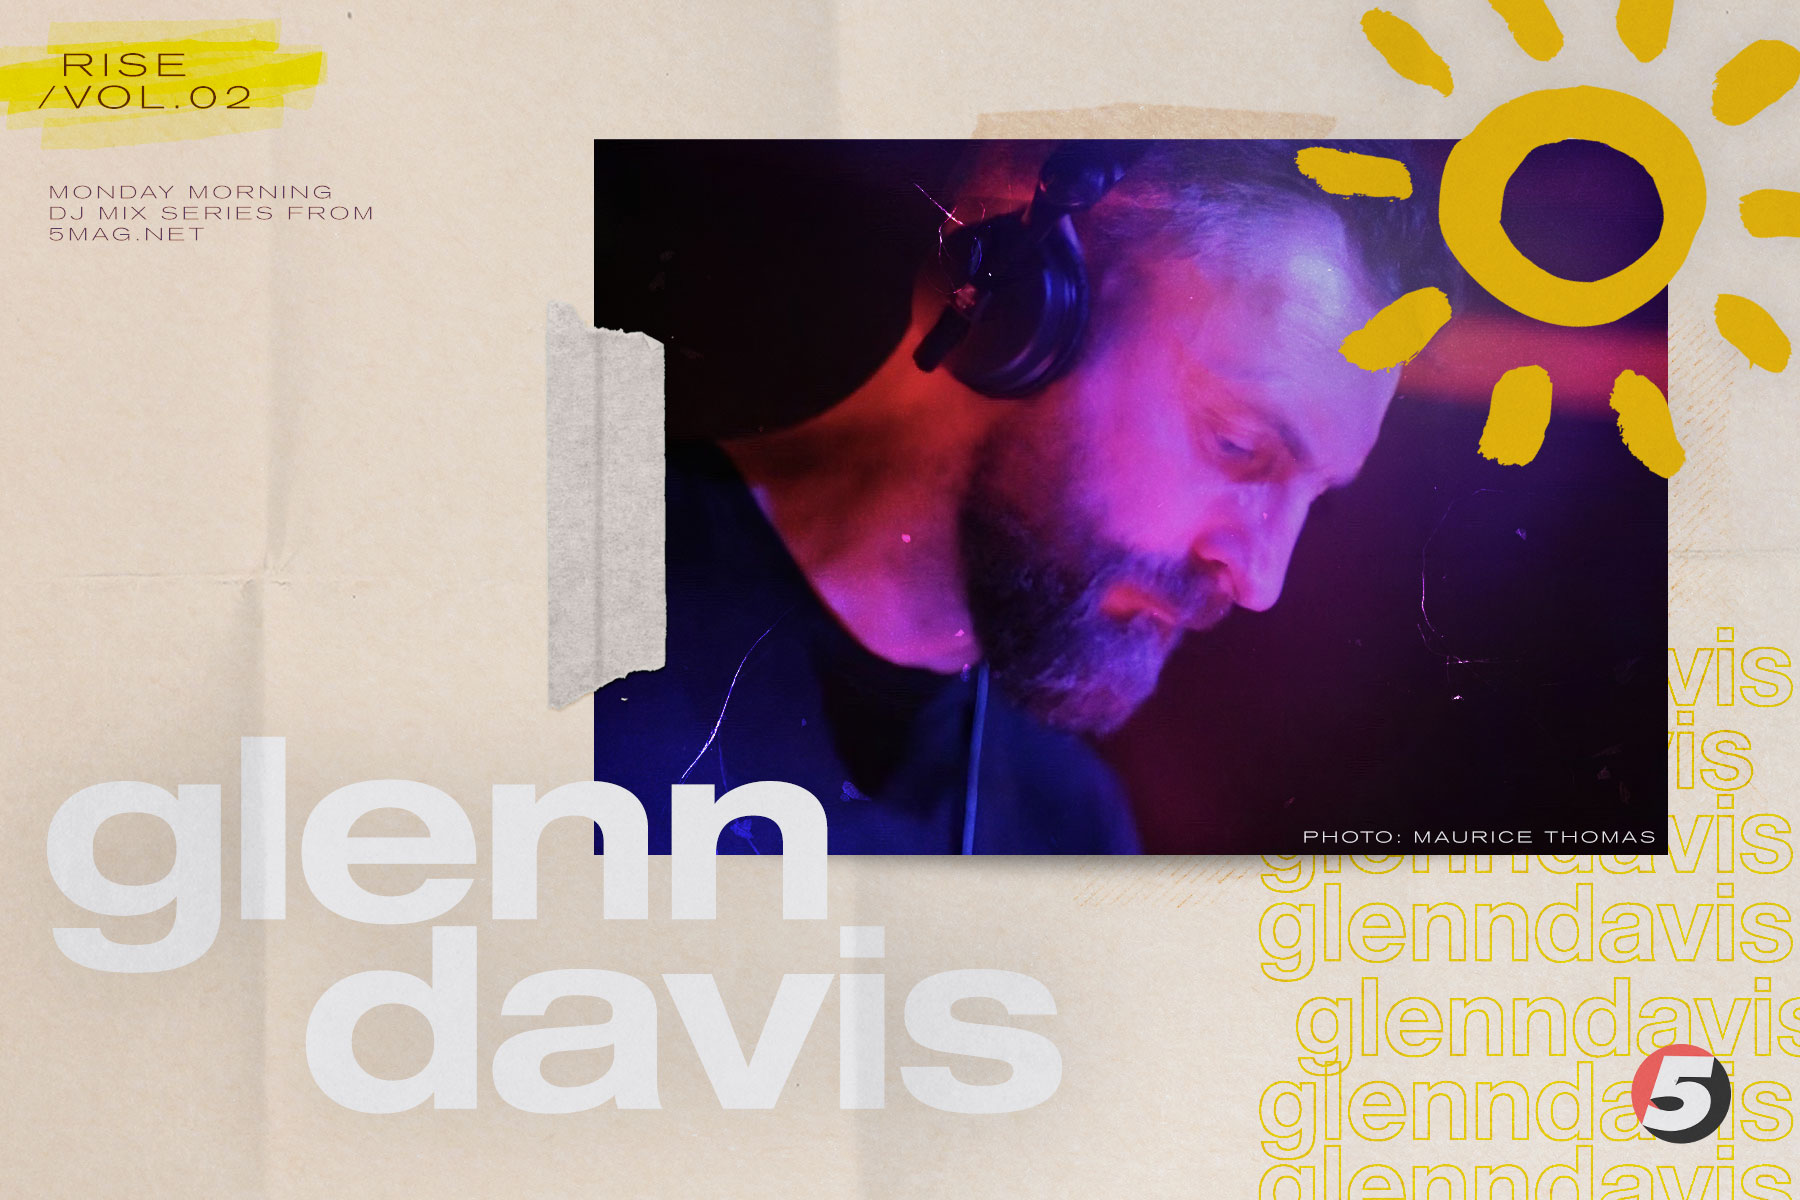 Glenn Davis DJ mix